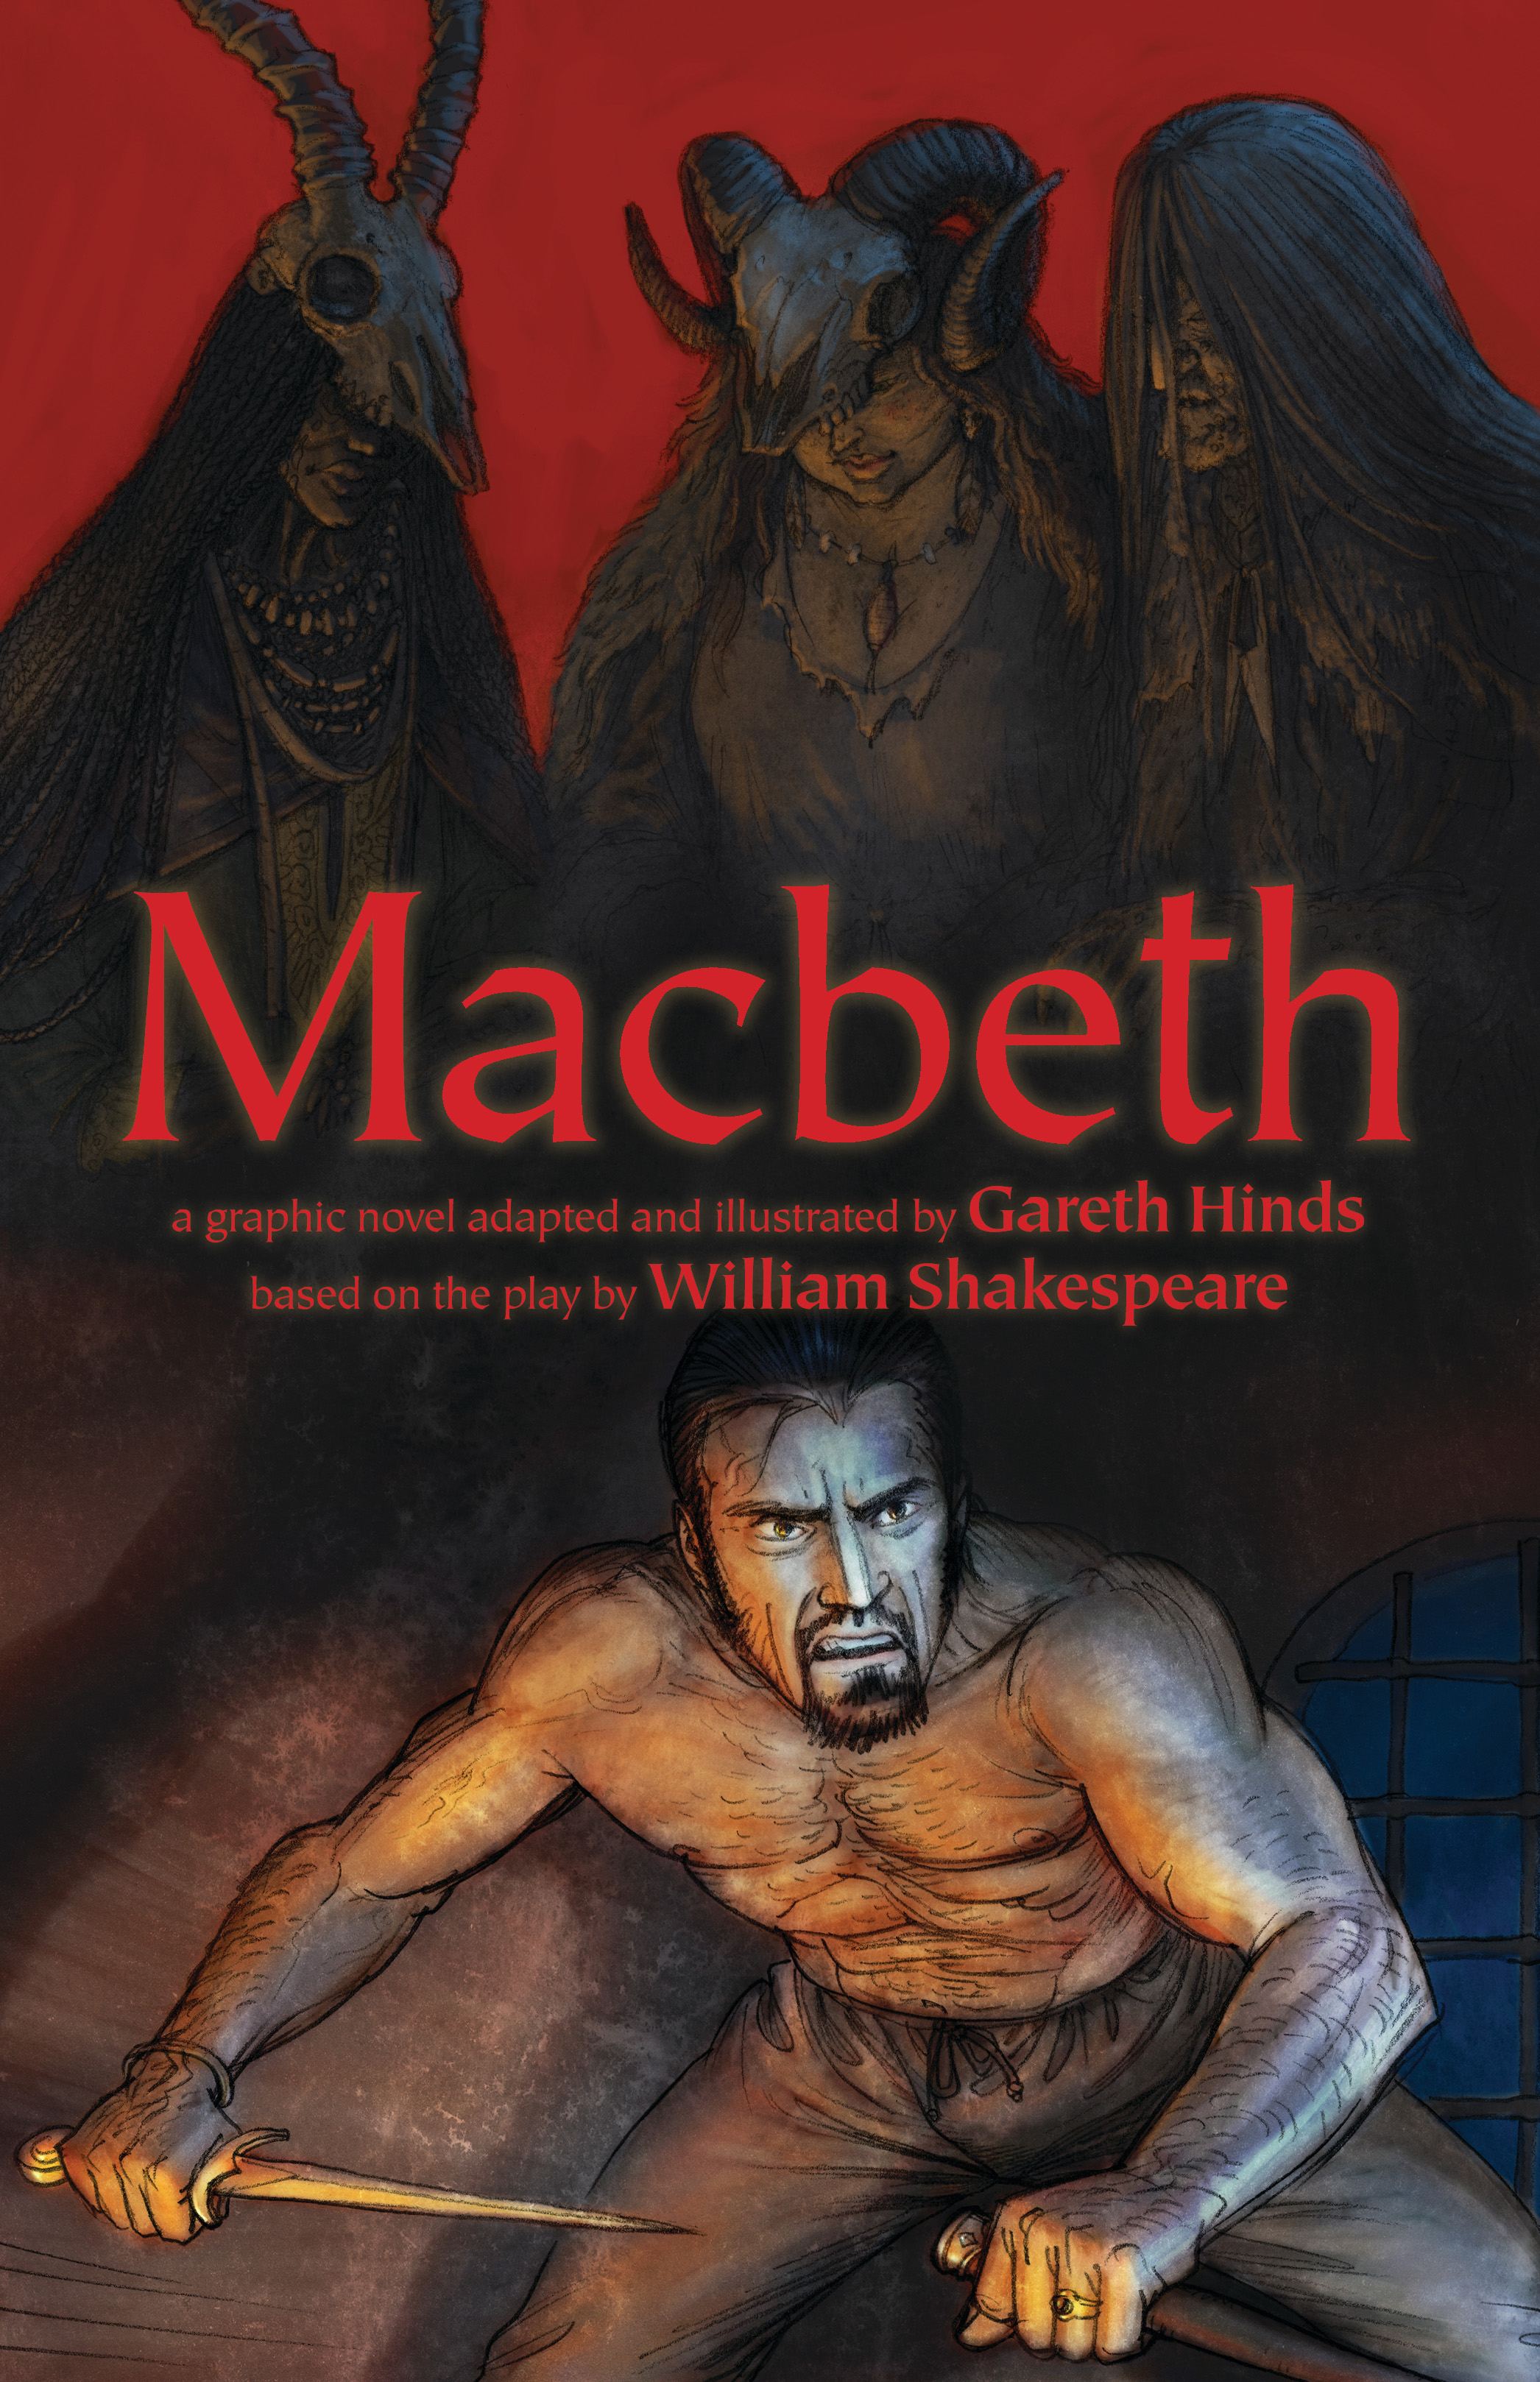 Macbeth by Gareth Hiinds